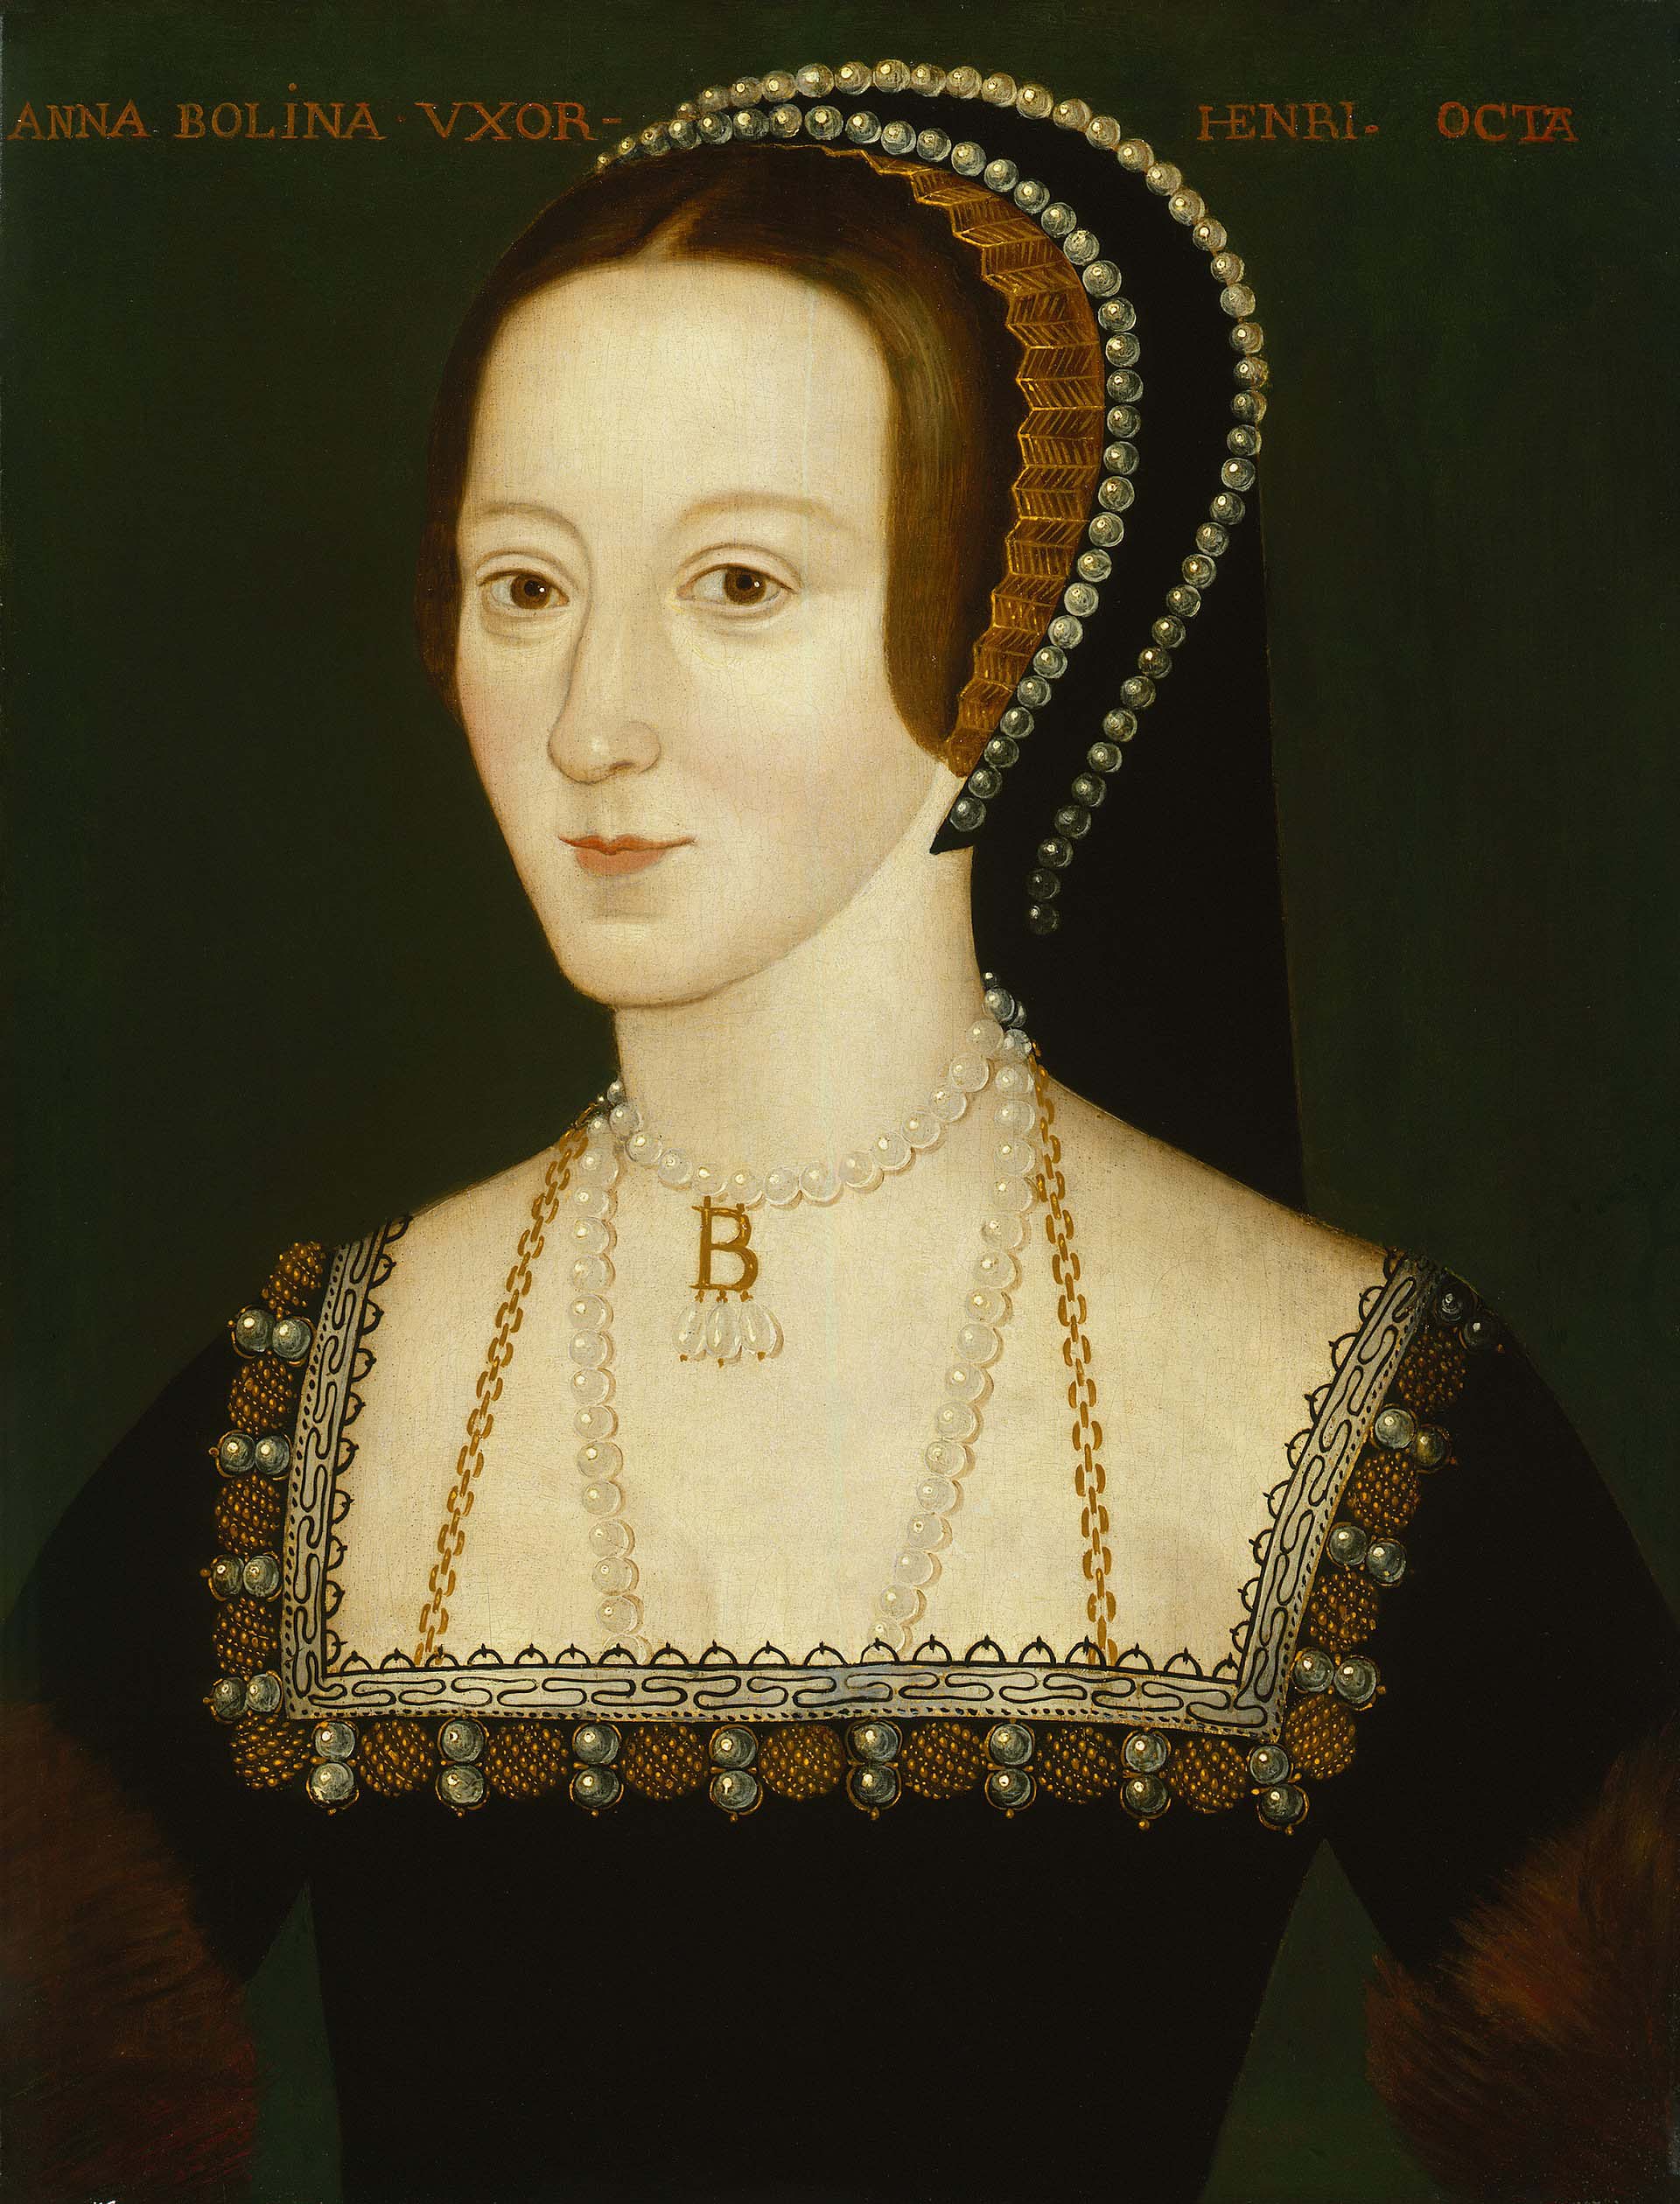 The original Portrait of Anne Boleyn by Unknown artist